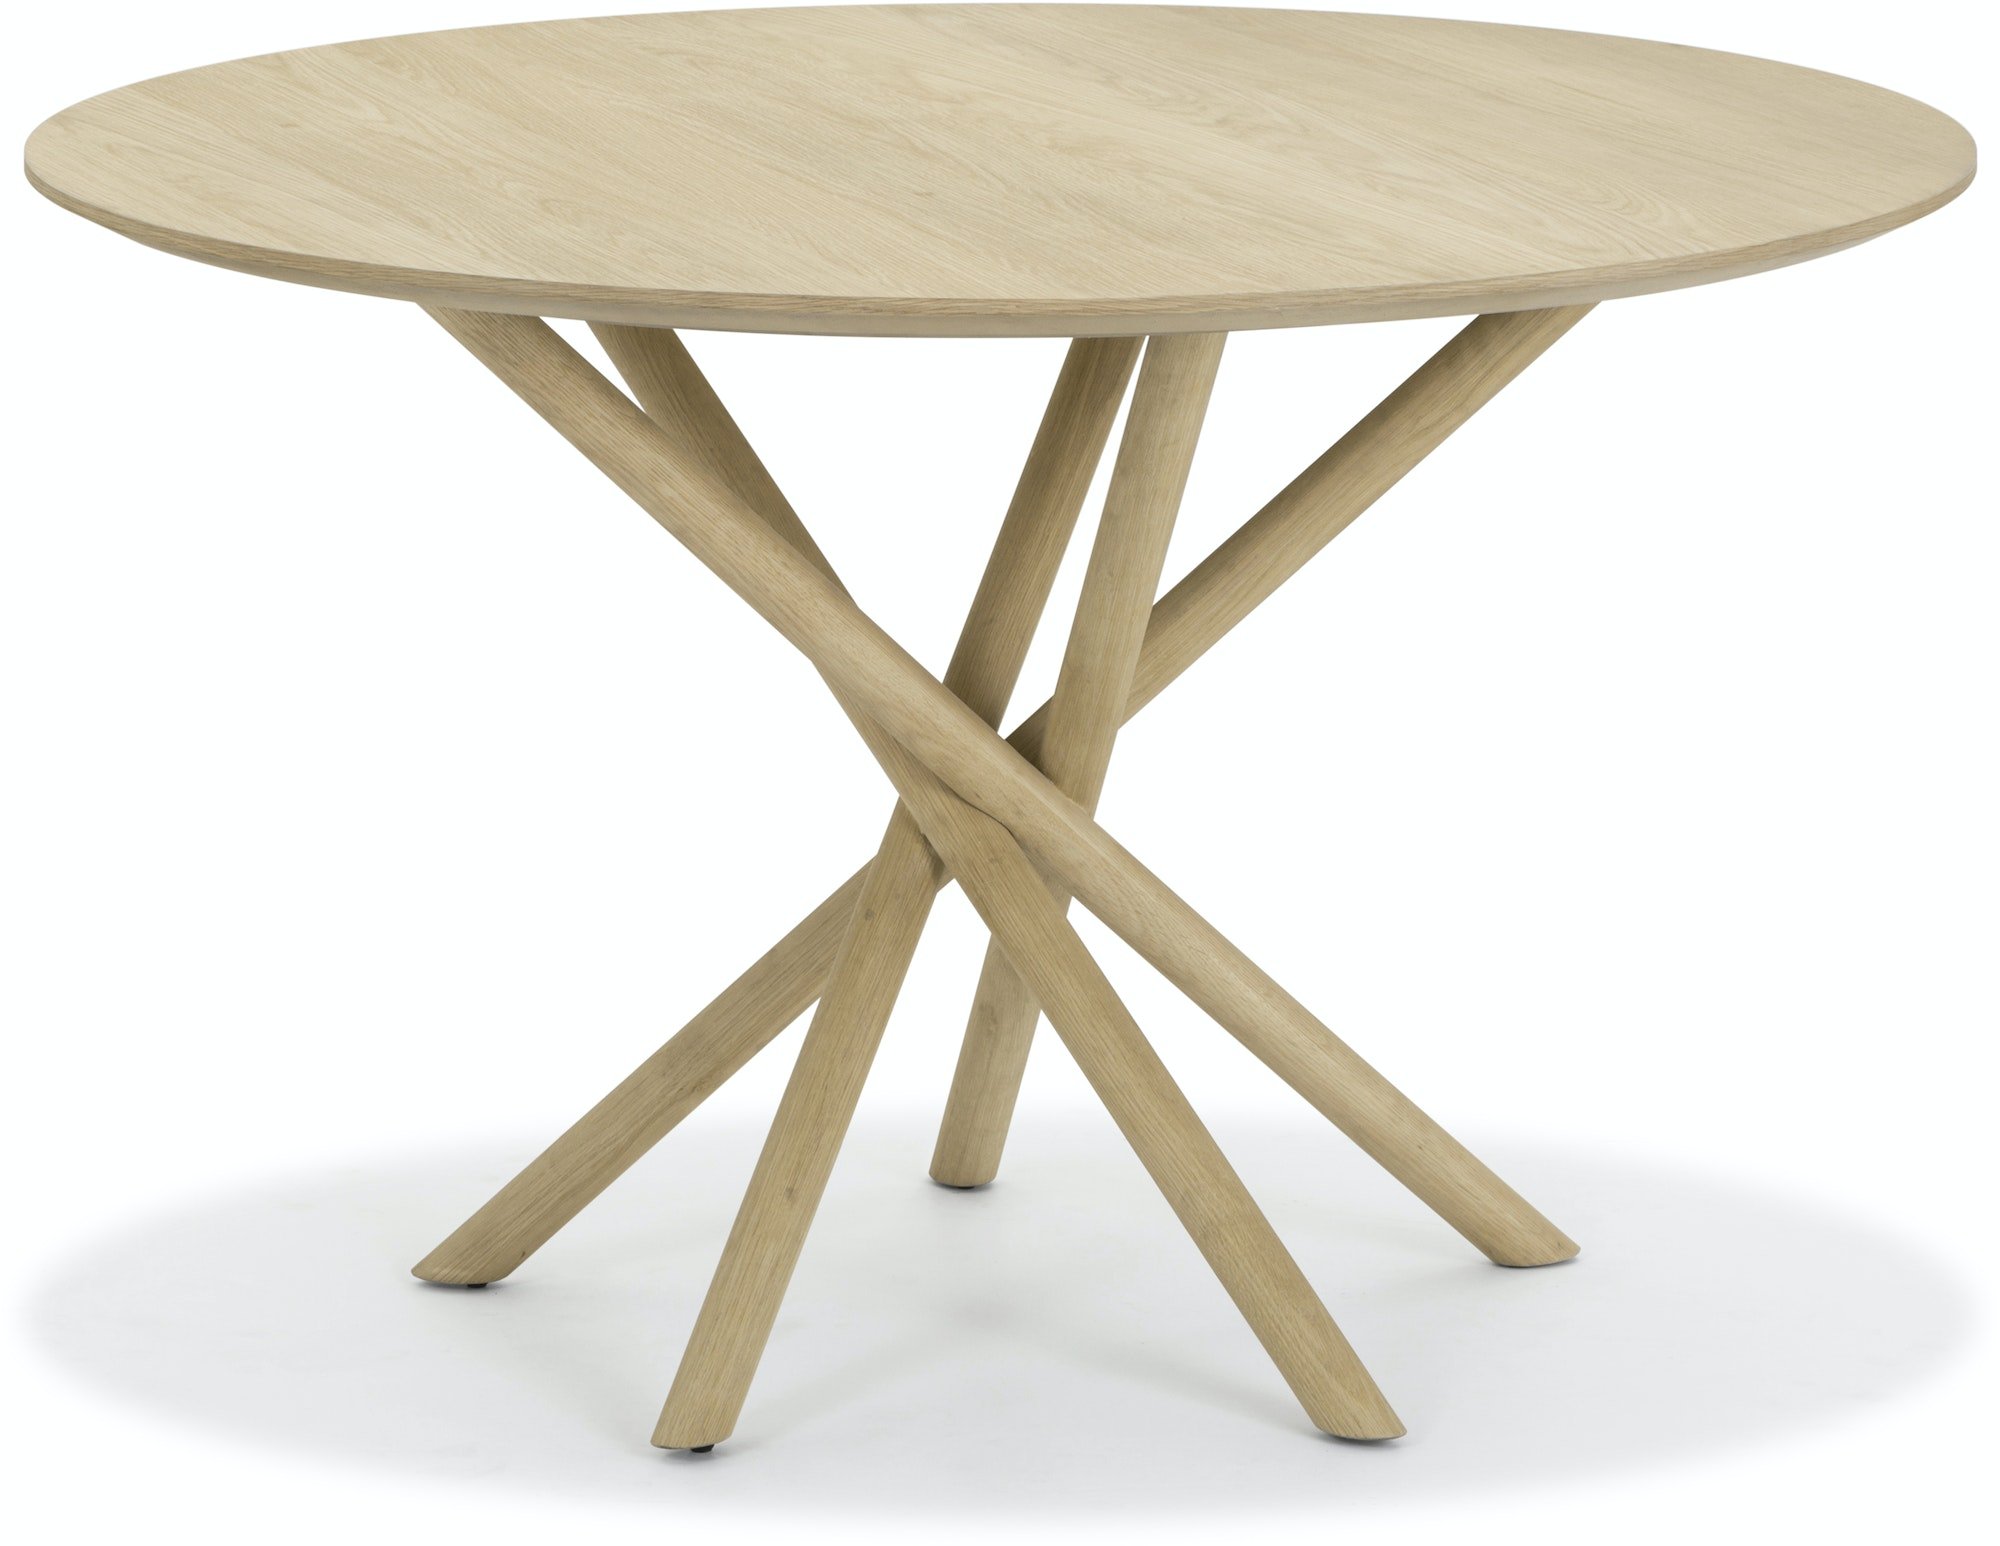 På billedet ser du variationen Hasseris, Rundt spisebord, Krydsstel, Ø120 cm, eg natur fra brandet Nielsen Design i en størrelse D: 120 cm. x H: 76 cm. x B: 120 cm. x L: 120 cm. i farven Eg natur